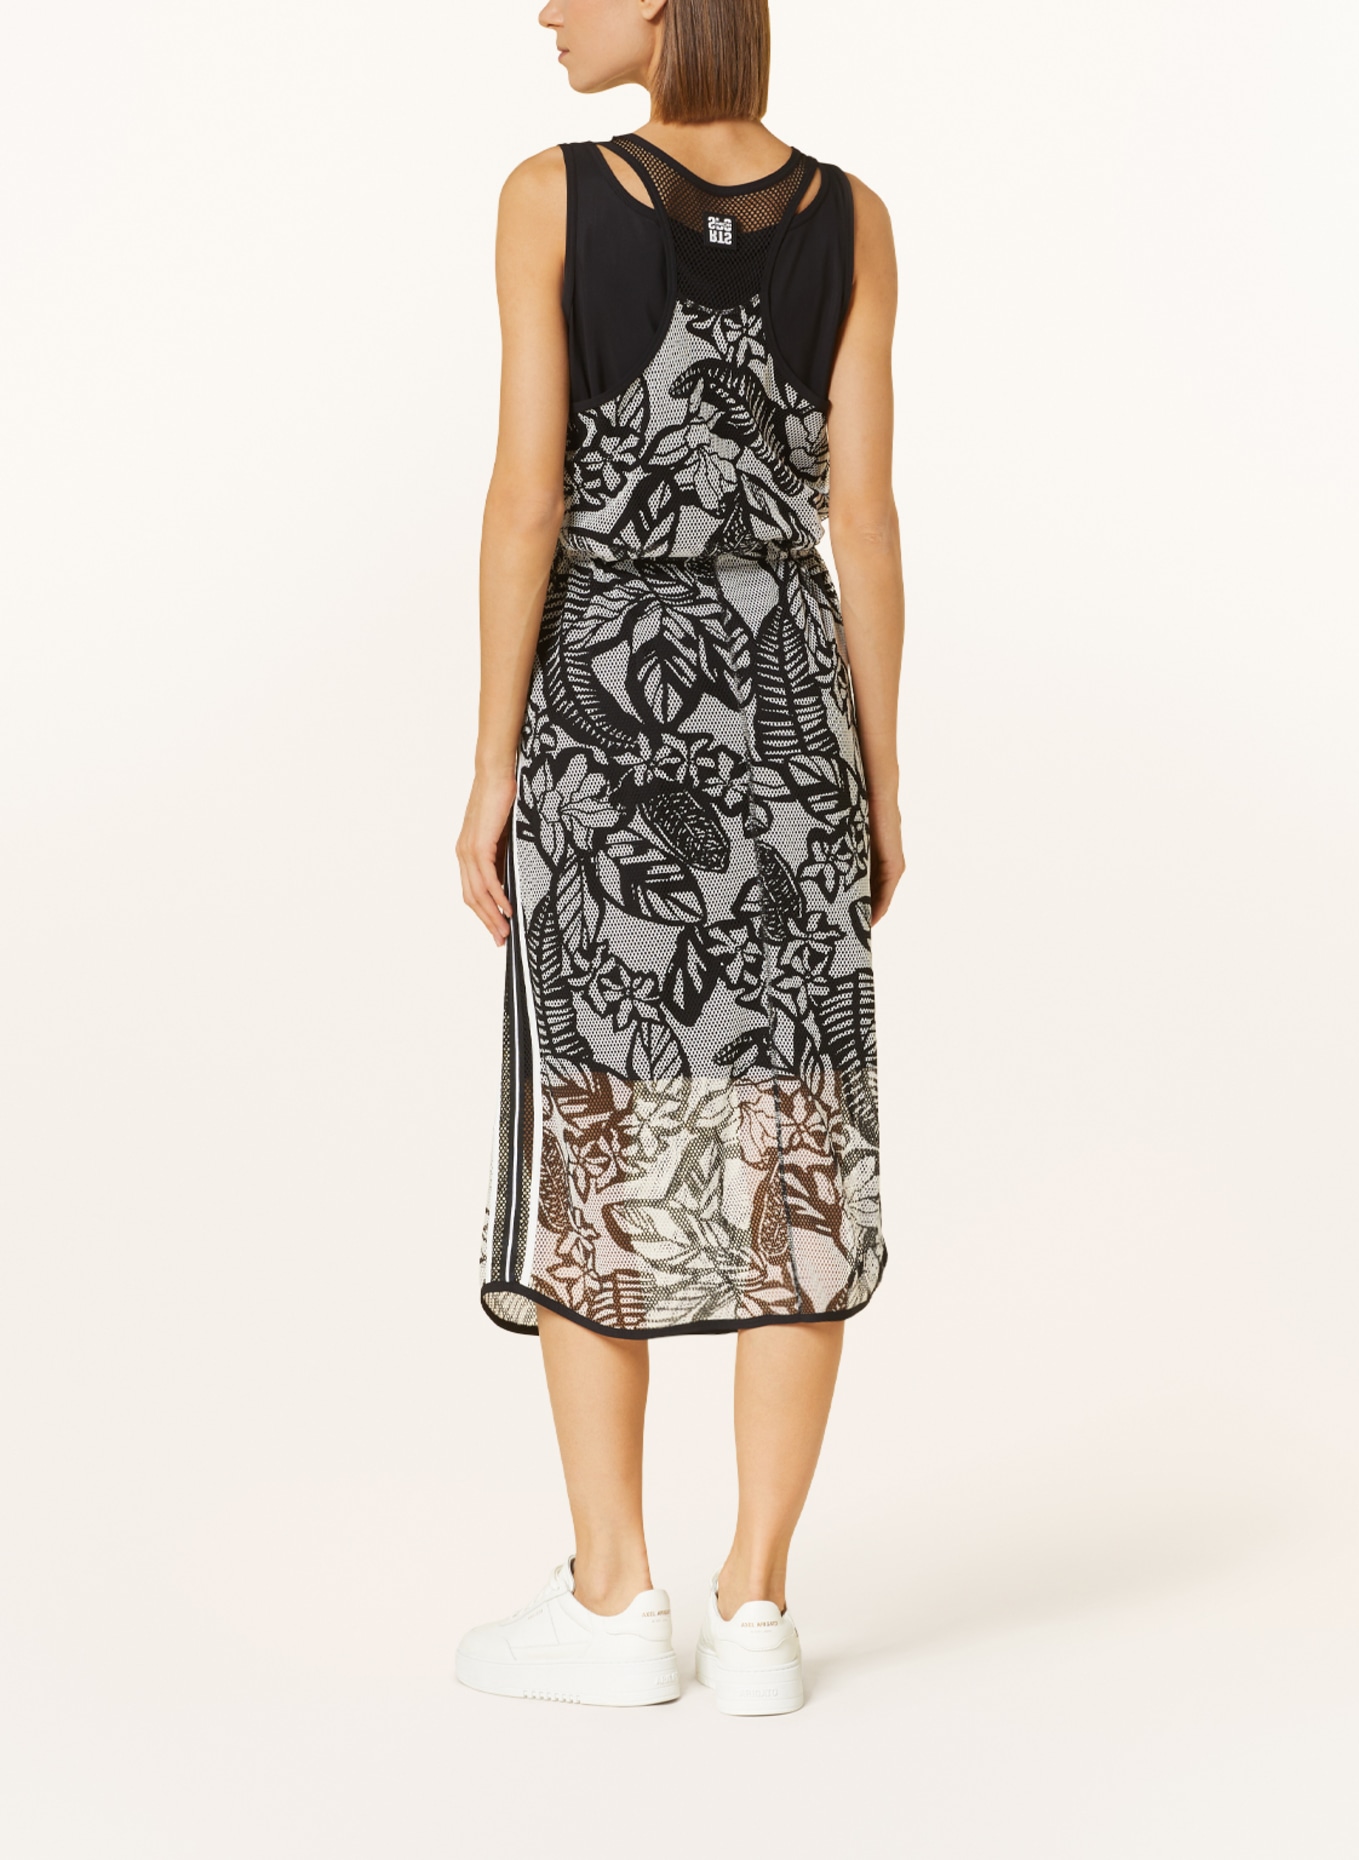 MARC CAIN Mesh-Kleid, Farbe: 910 black and white (Bild 3)